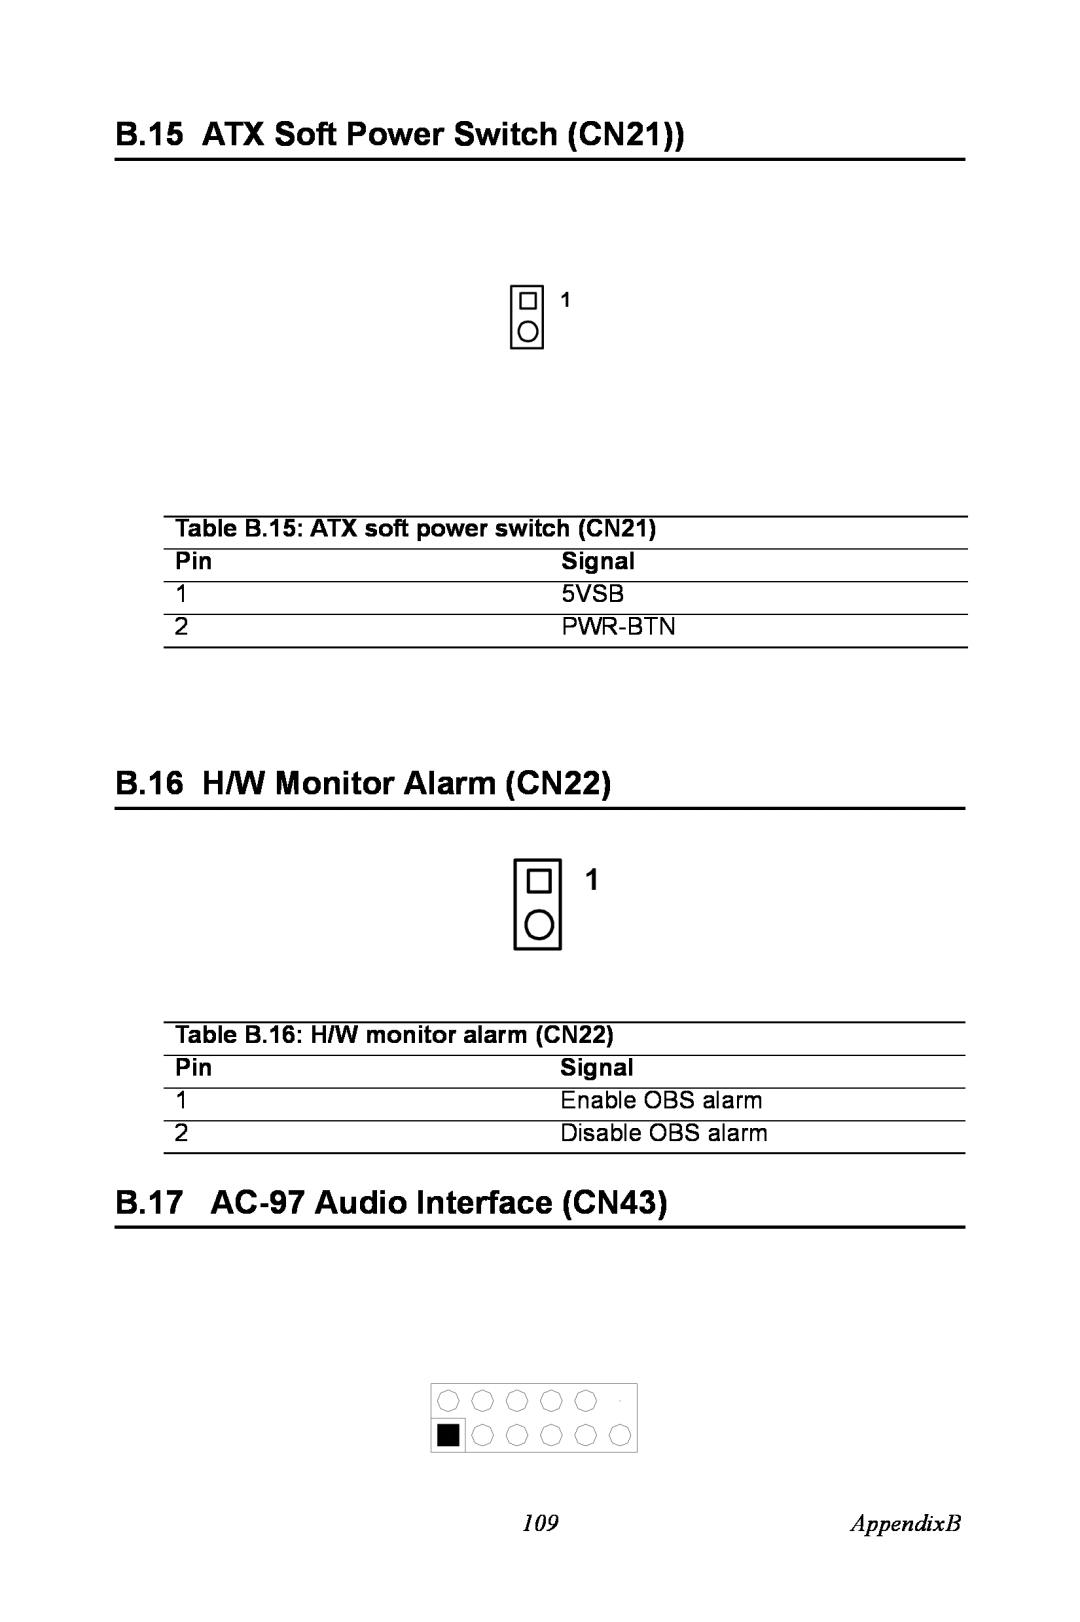 Advantech PCA-6187 B.15 ATX Soft Power Switch CN21, B.16 H/W Monitor Alarm CN22, B.17 AC-97 Audio Interface CN43, Signal 